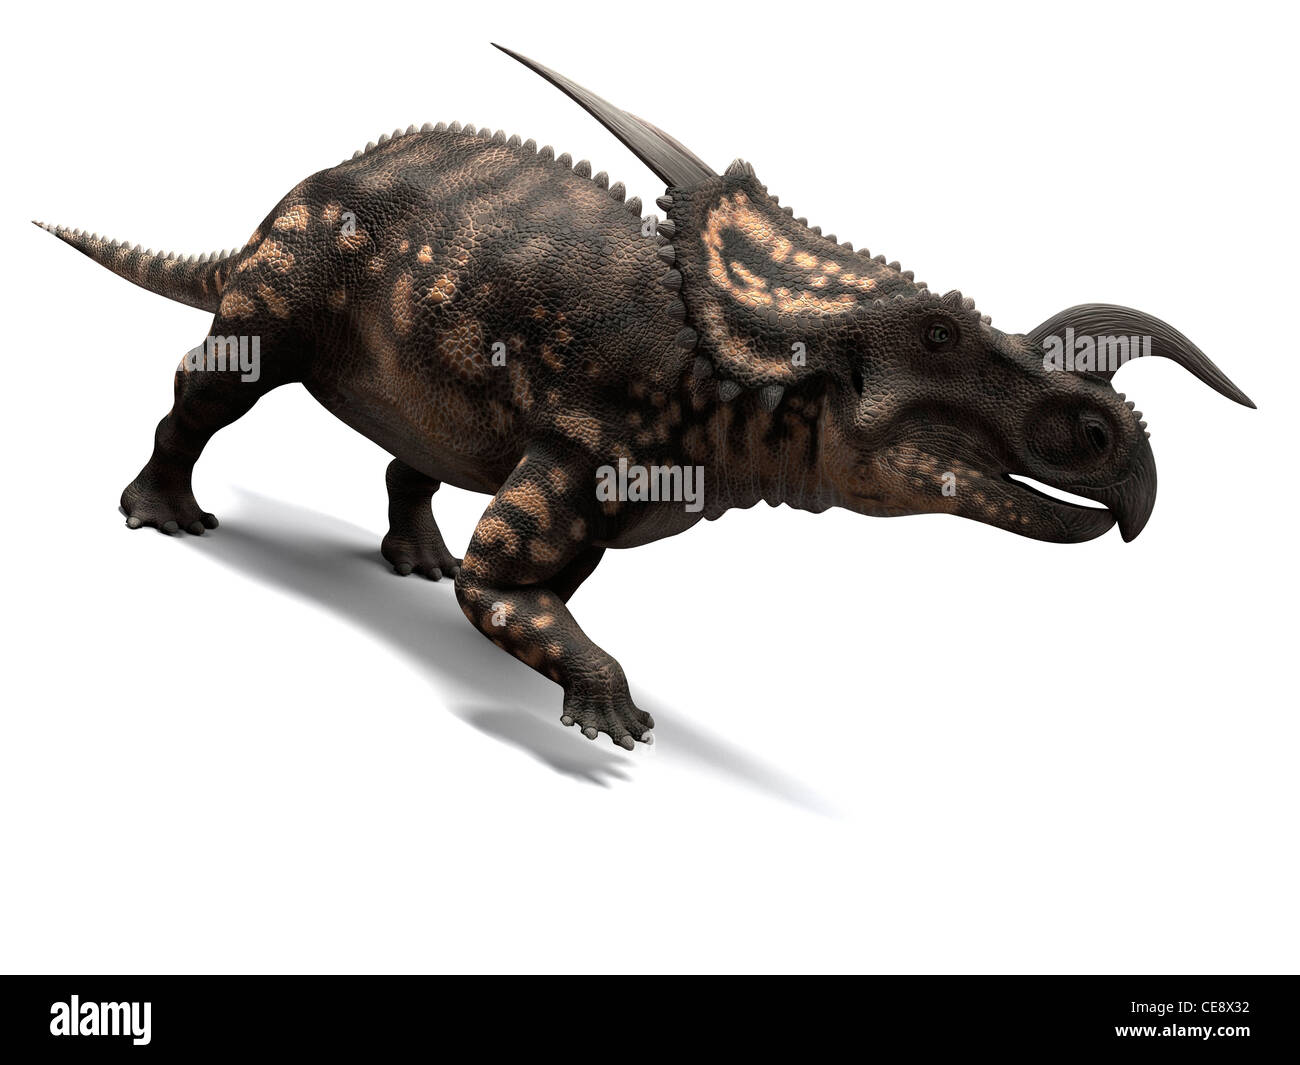 Einiosaurus dinosaur, computer artwork. This dinosaur lived 65 to 100 million years ago during the Late Cretaceous period. Stock Photo